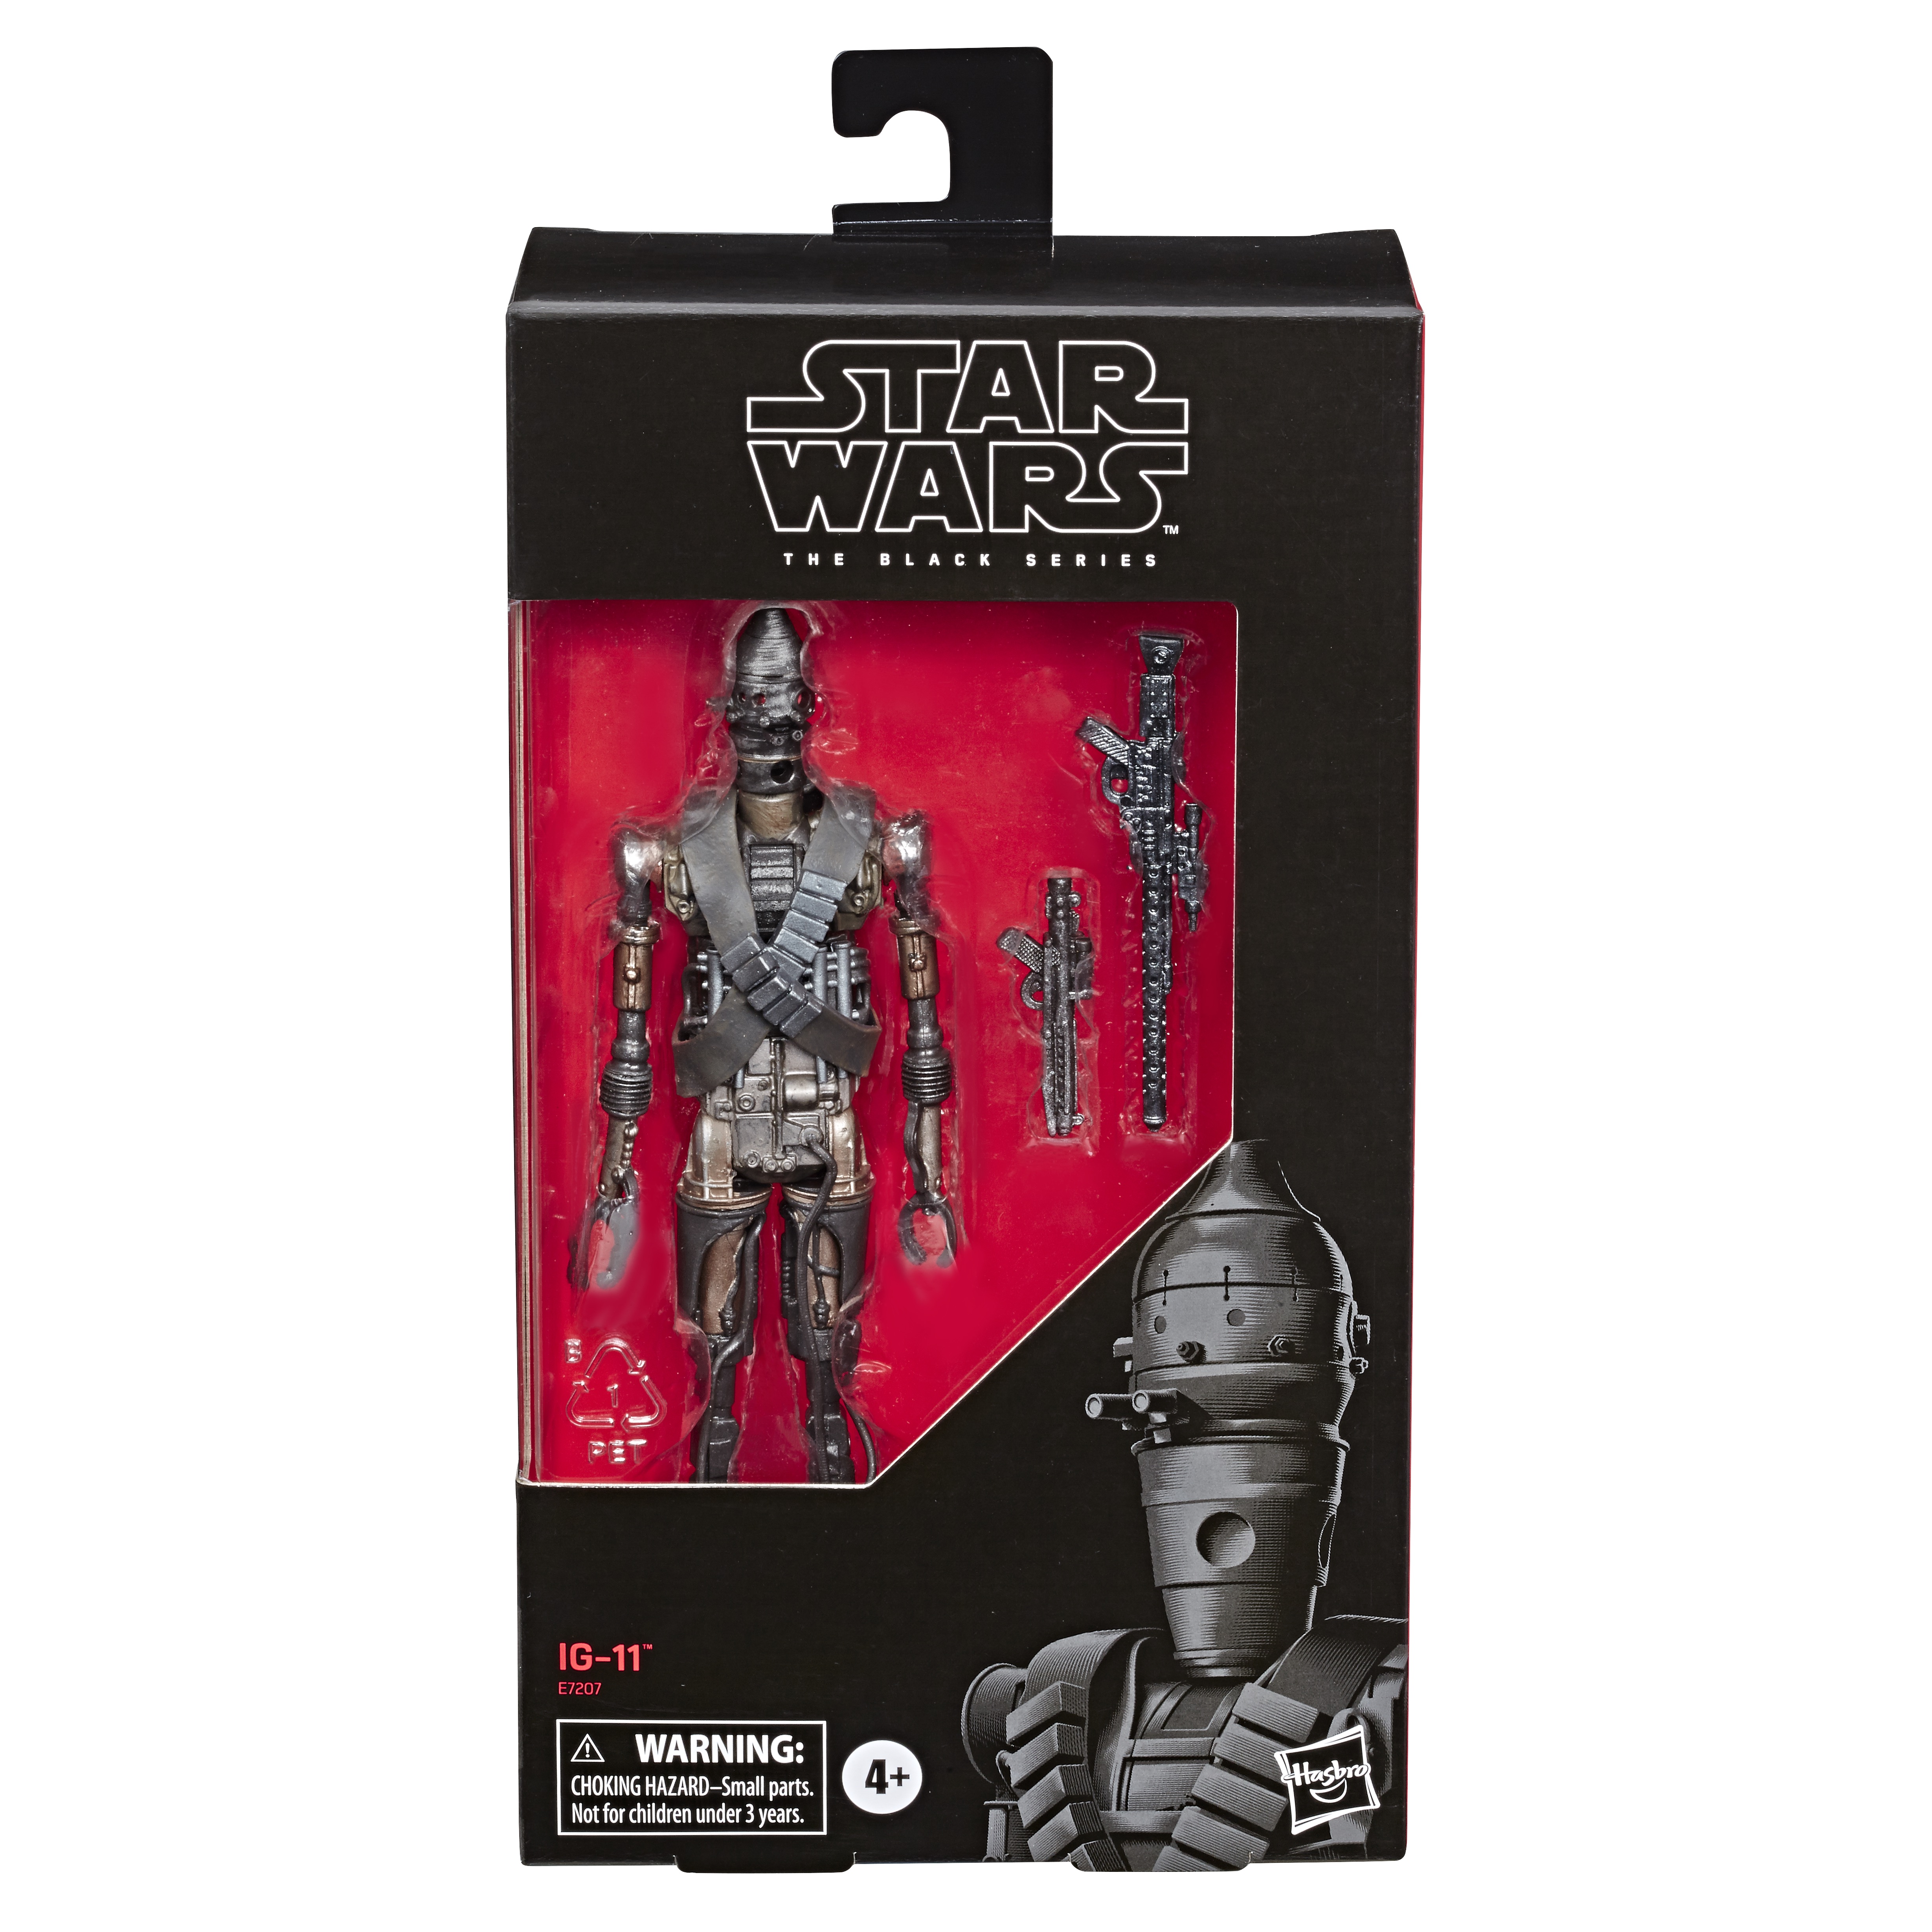 Star Wars Black Series IG-11 6-inch Action Figure - Exclusive  630509881215